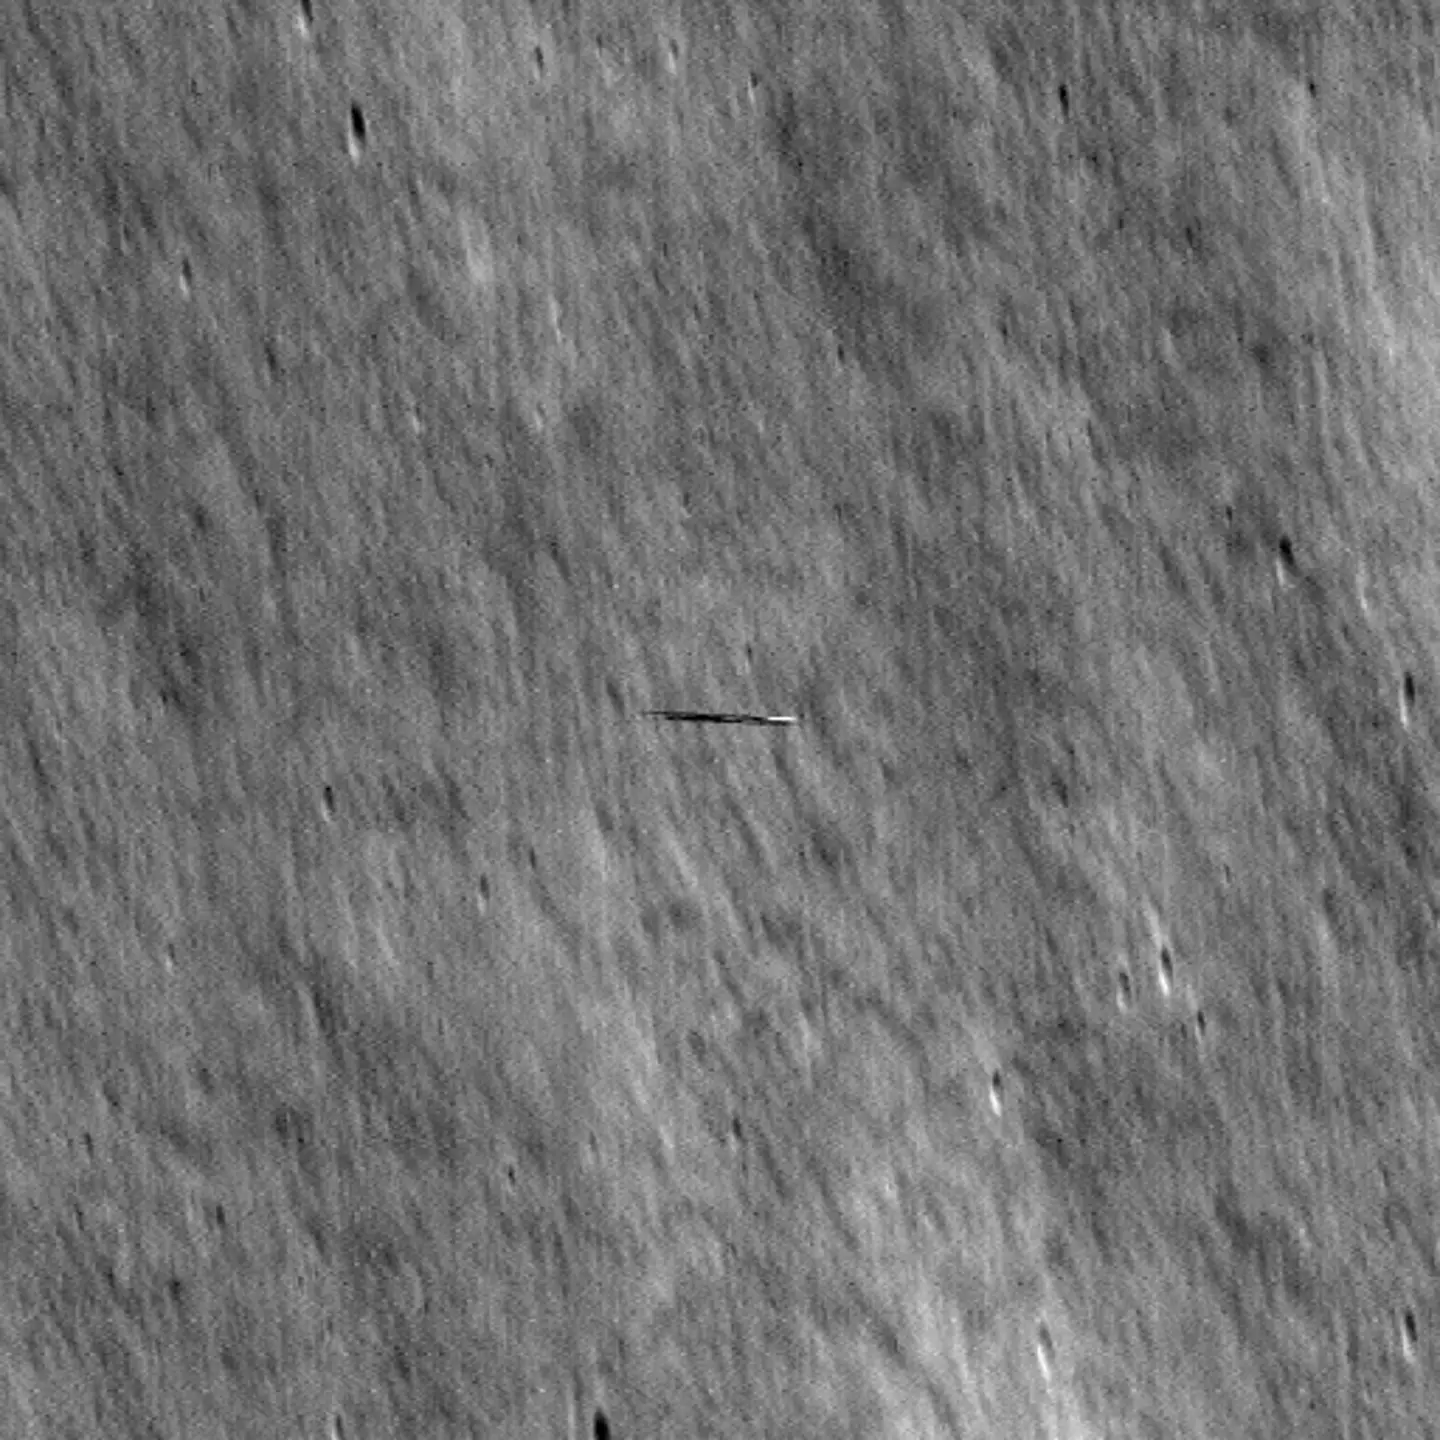 A NASA spacecraft took the photographs. (NASA/Goddard/Arizona State University) 